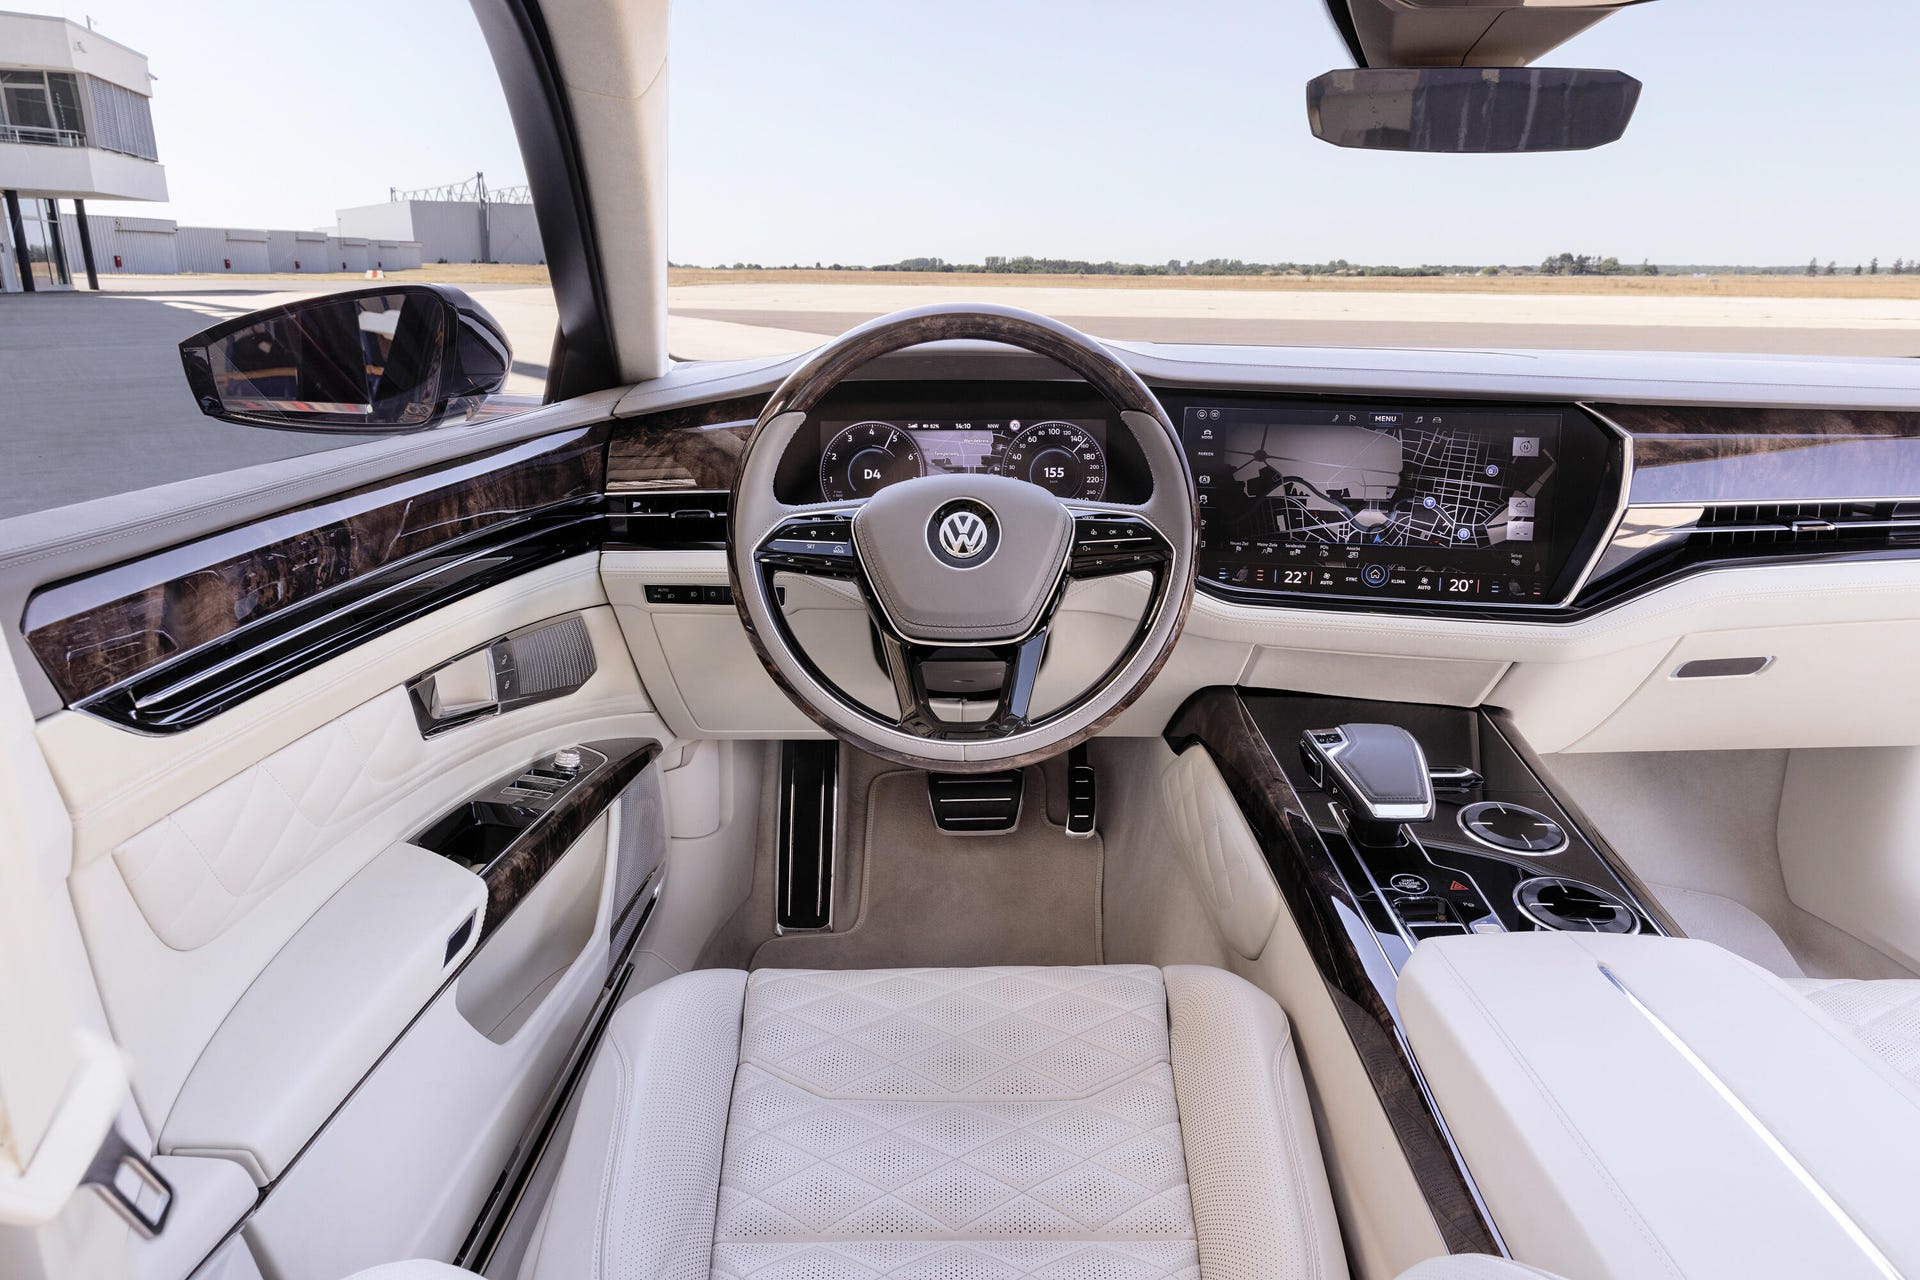 Interior photo of the Volkswagen Phaeton D2 prototype showing the dashboard and door panel